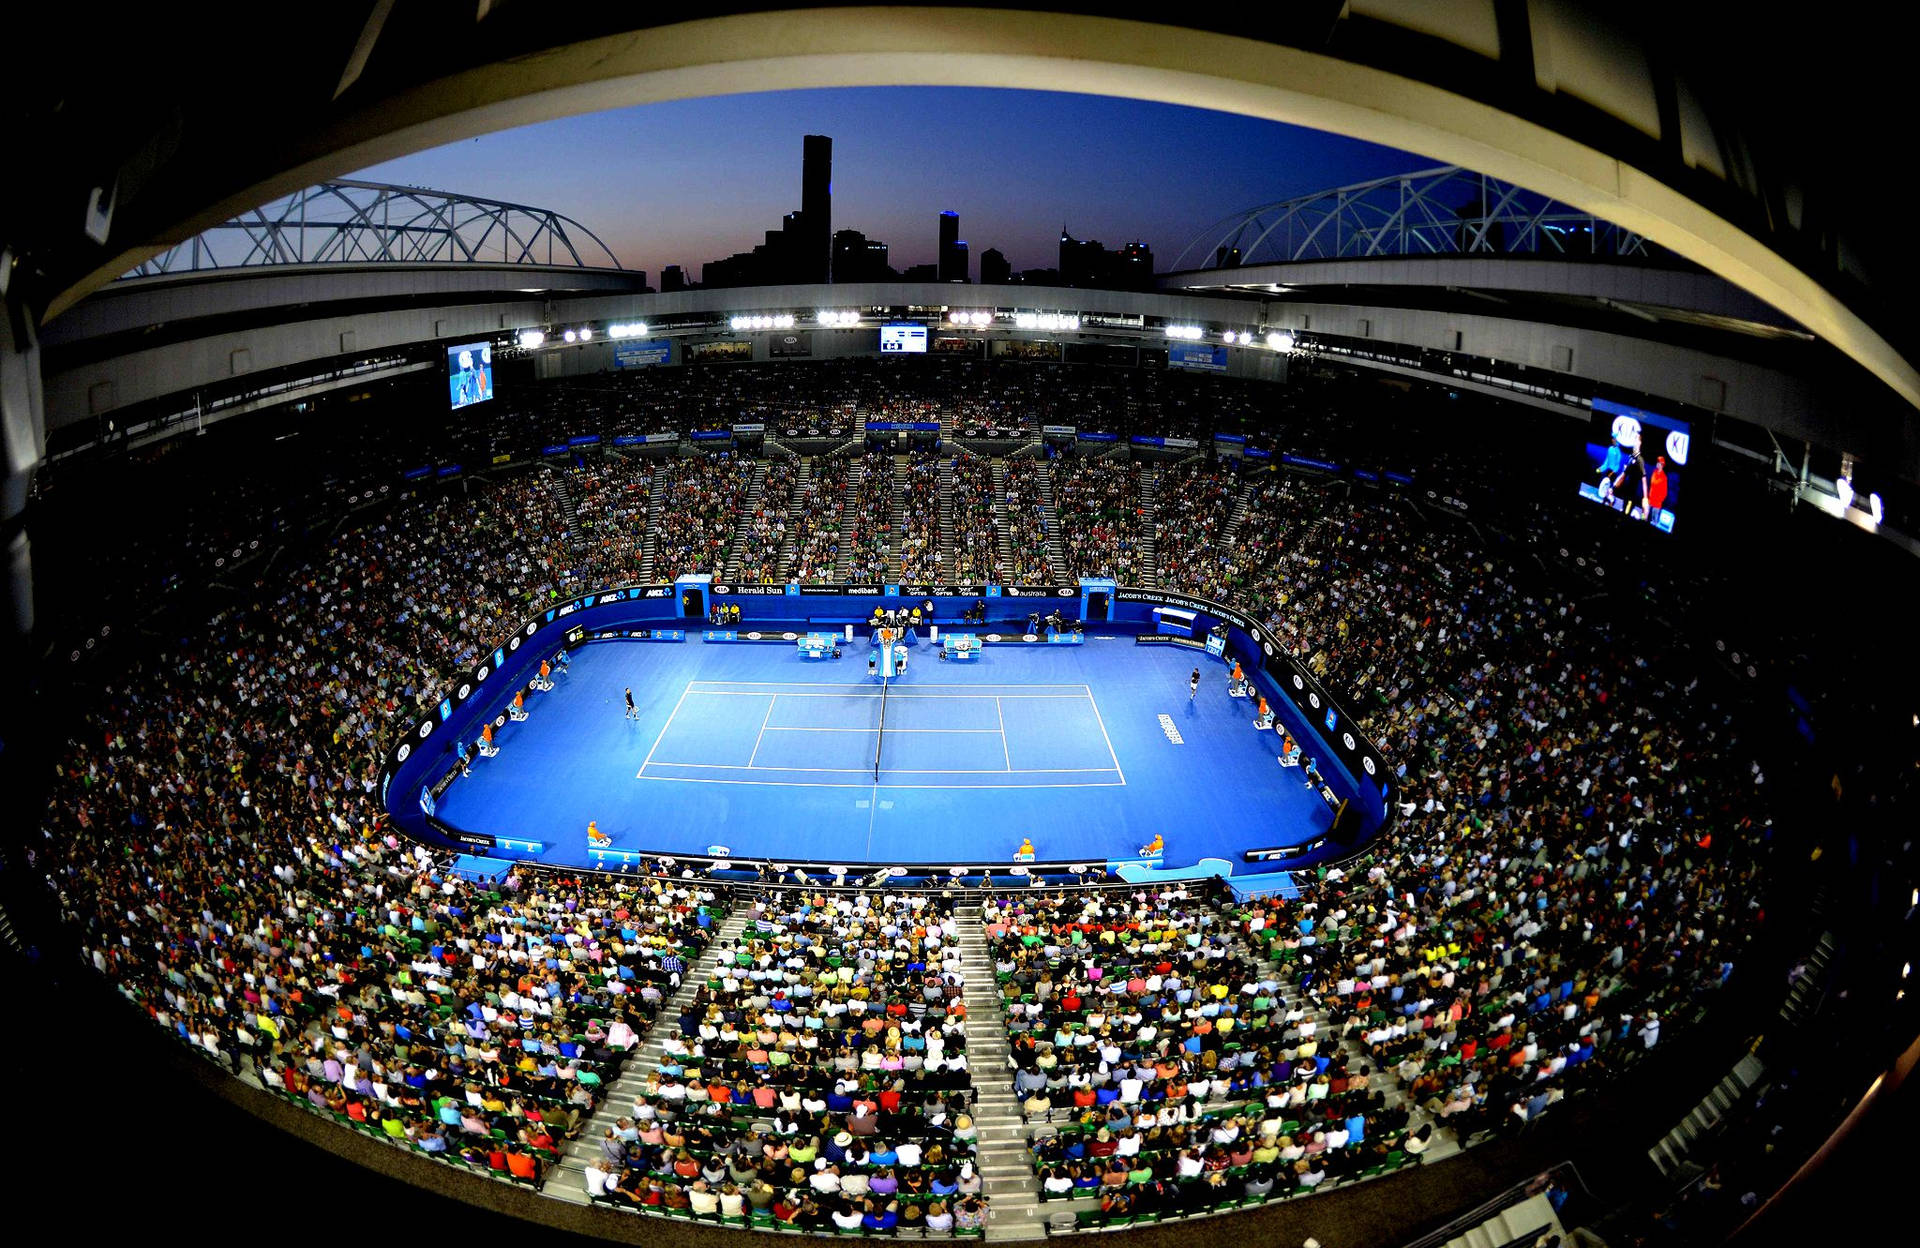 Spectacular Fisheye View Of The Australian Open Background